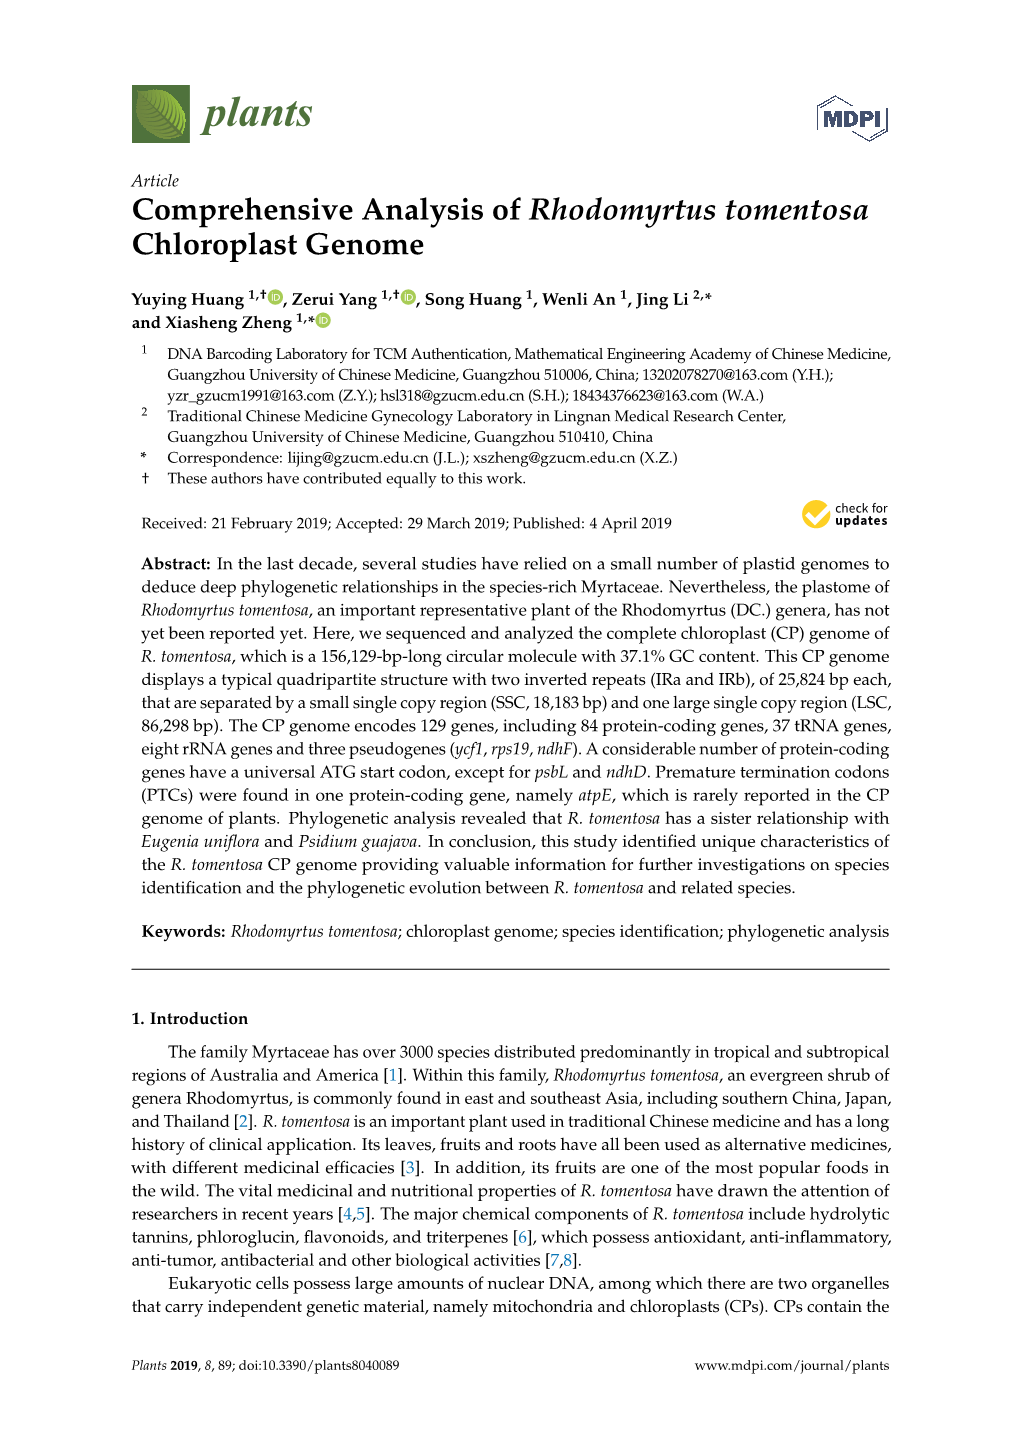 Comprehensive Analysis of Rhodomyrtus Tomentosa Chloroplast Genome